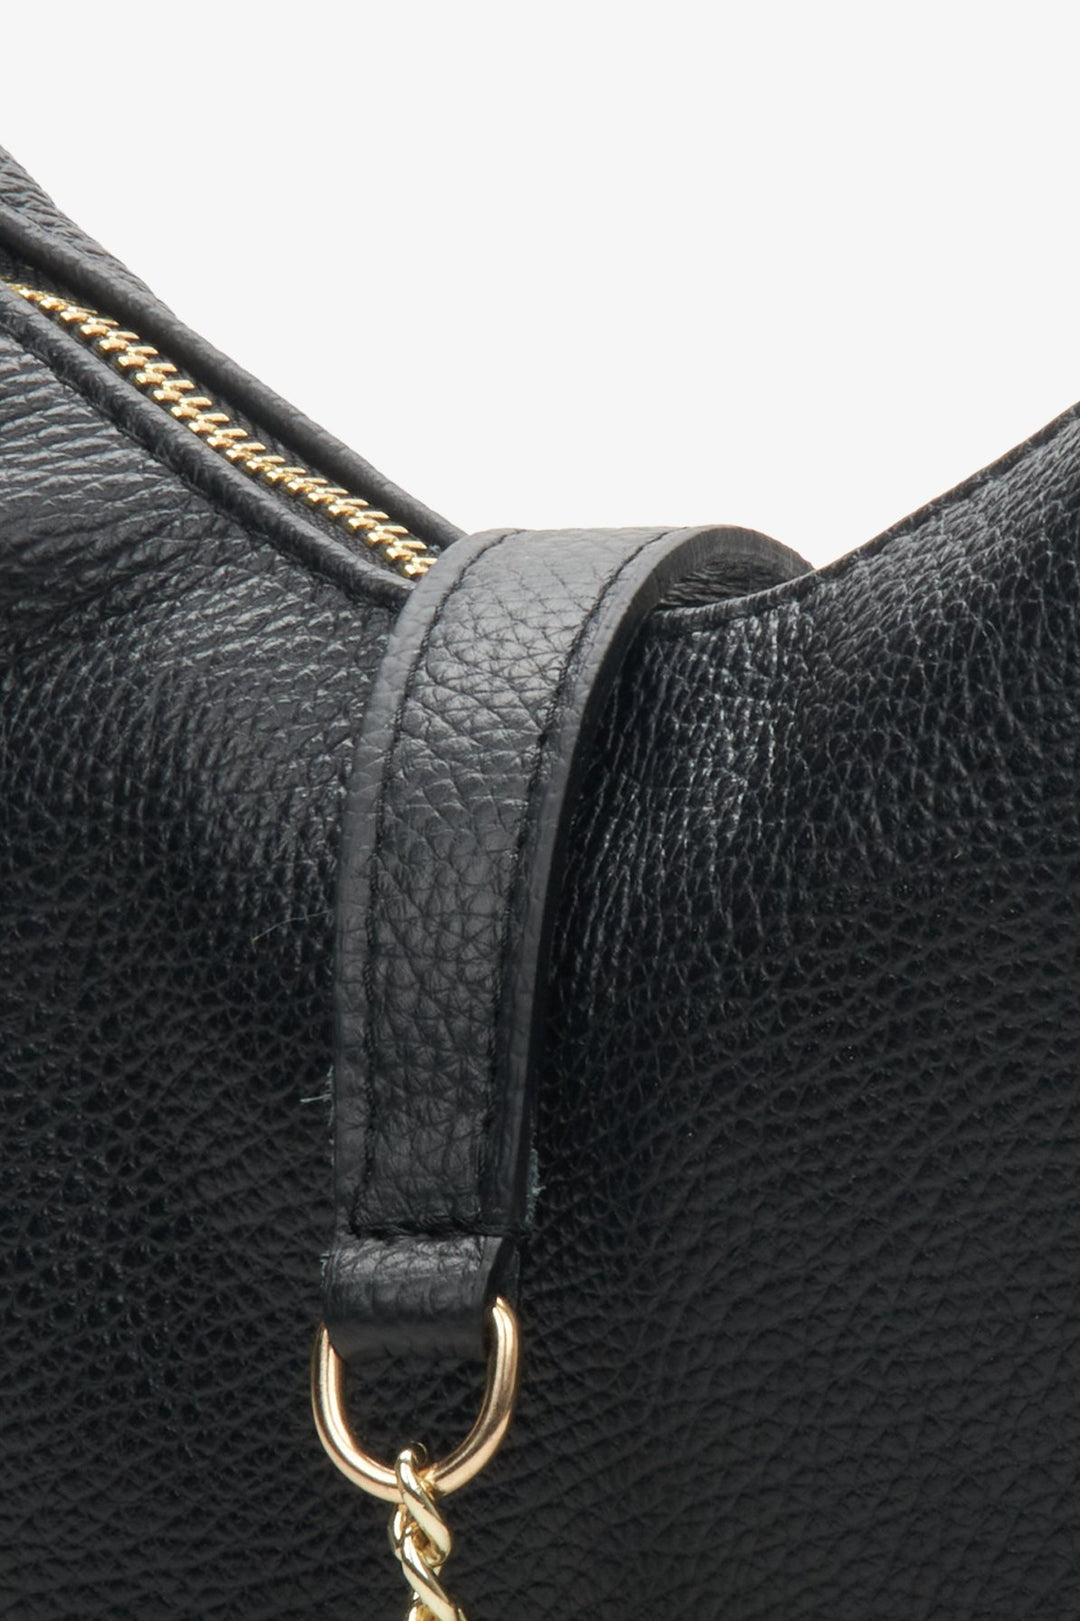 Women's black leather handbag by Estro - close-up on details.